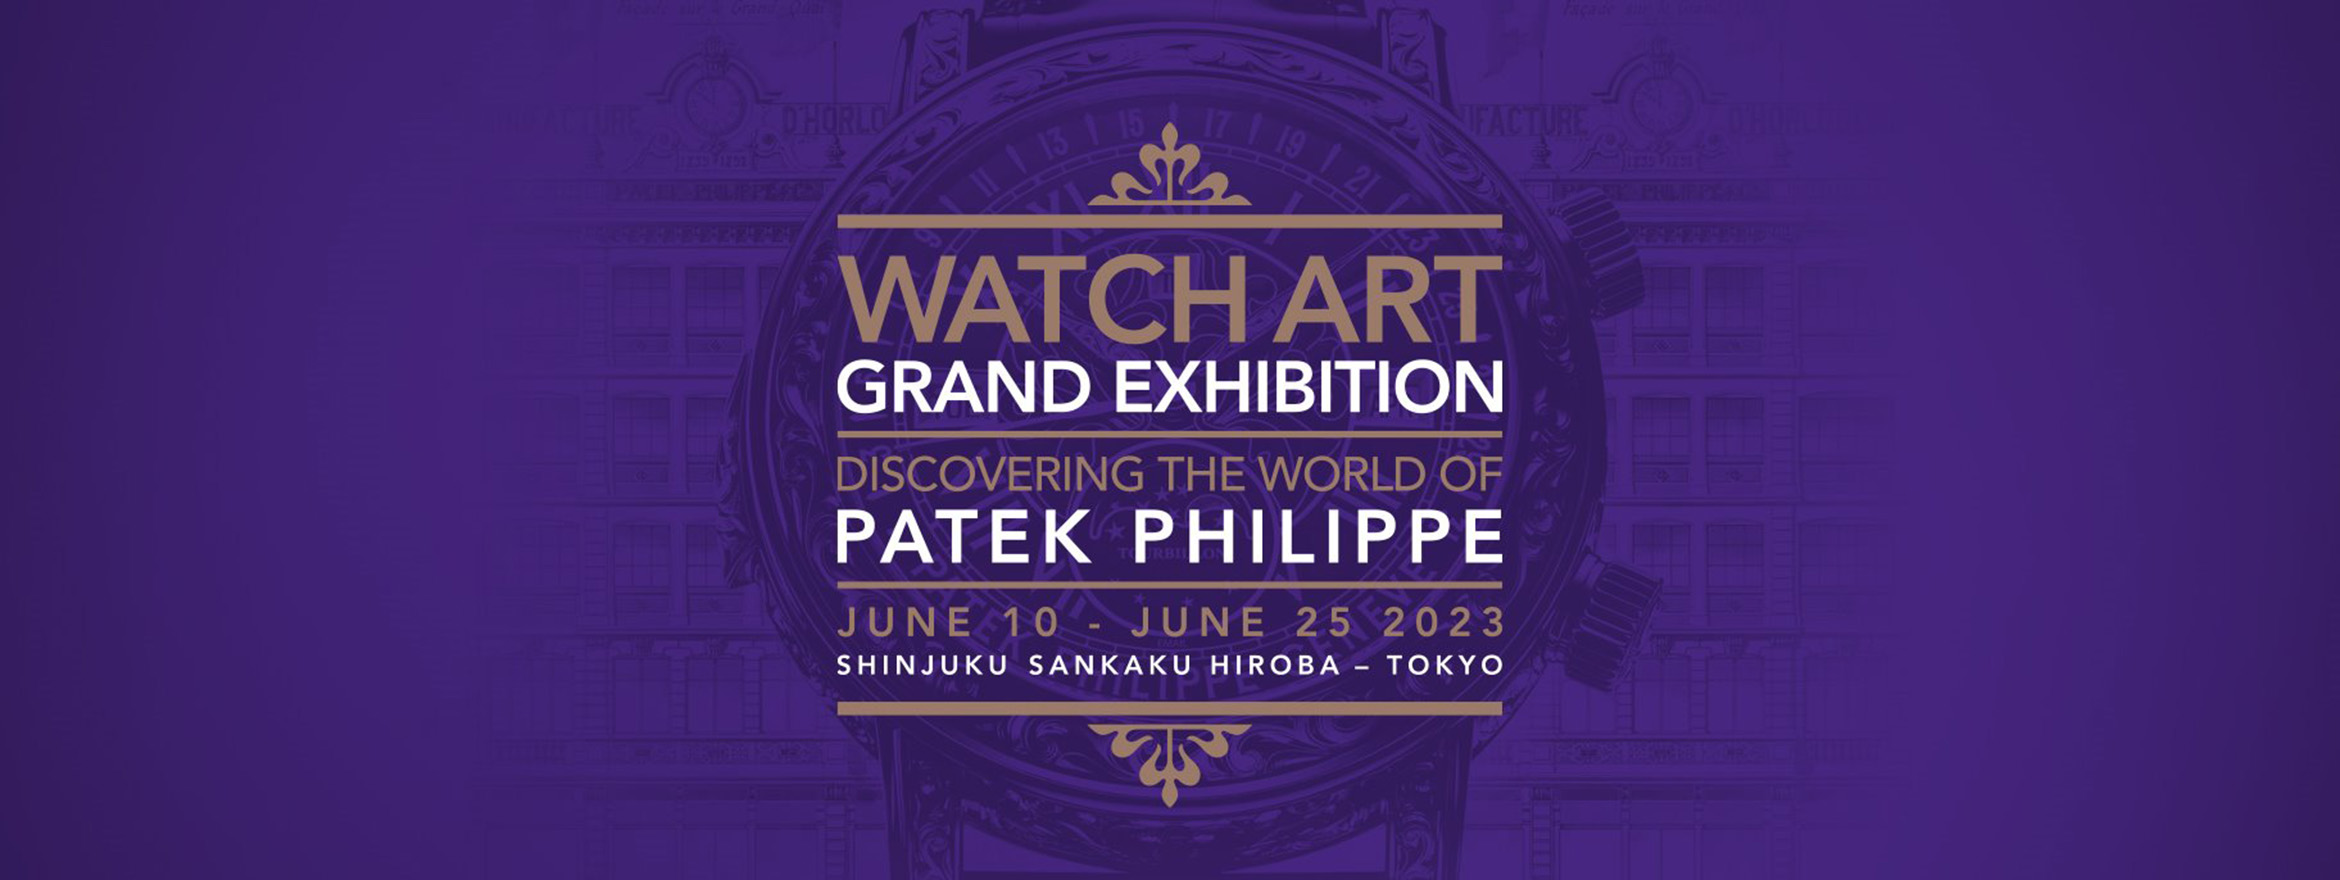 Patek Philippe Inaugurates the Grand Exhibition “Watch Art” Tokyo 2023 Edition